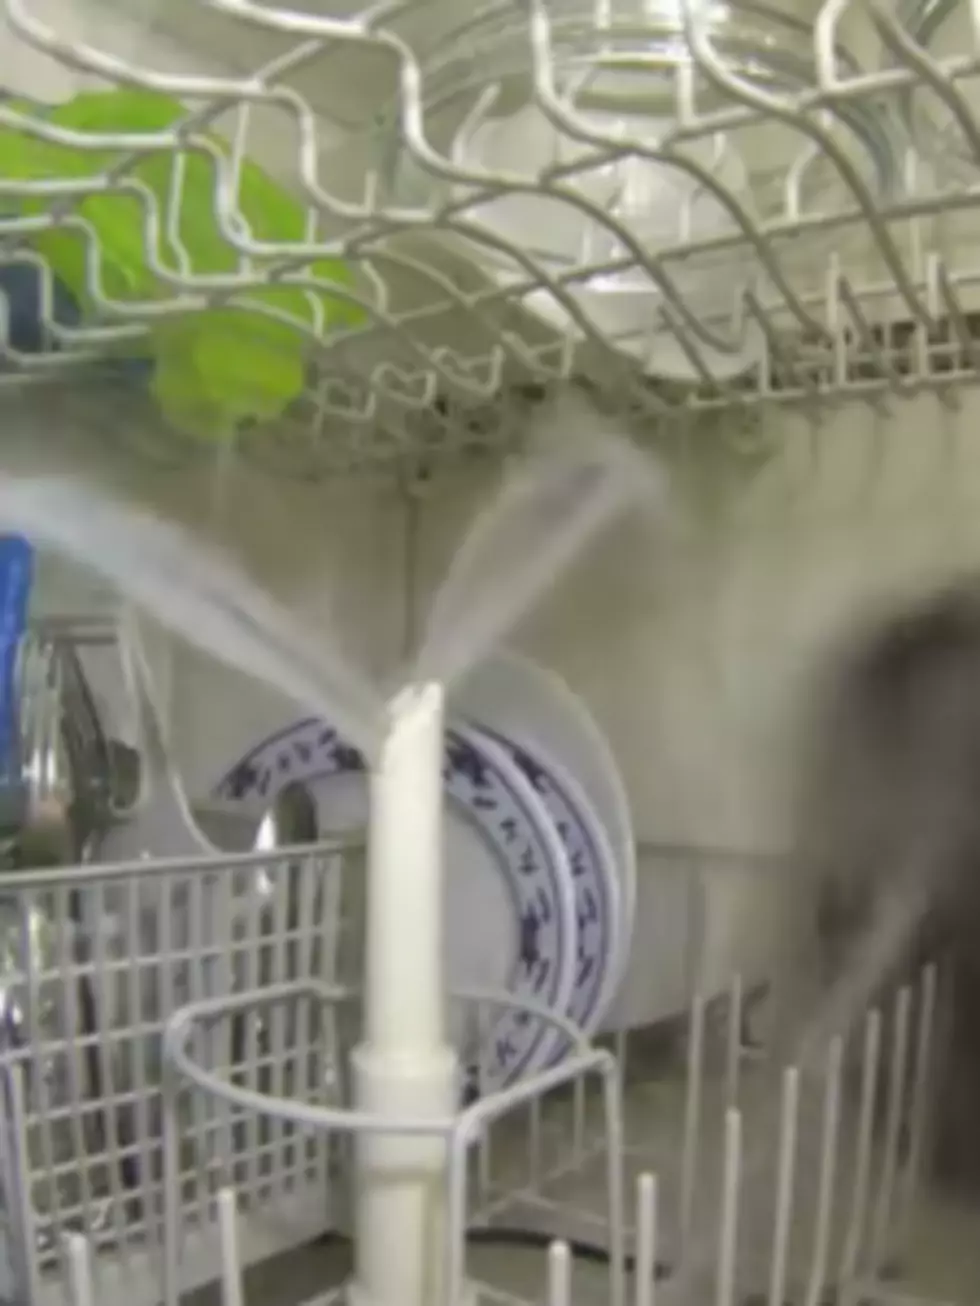 Man Places GoPro Inside Dishwasher